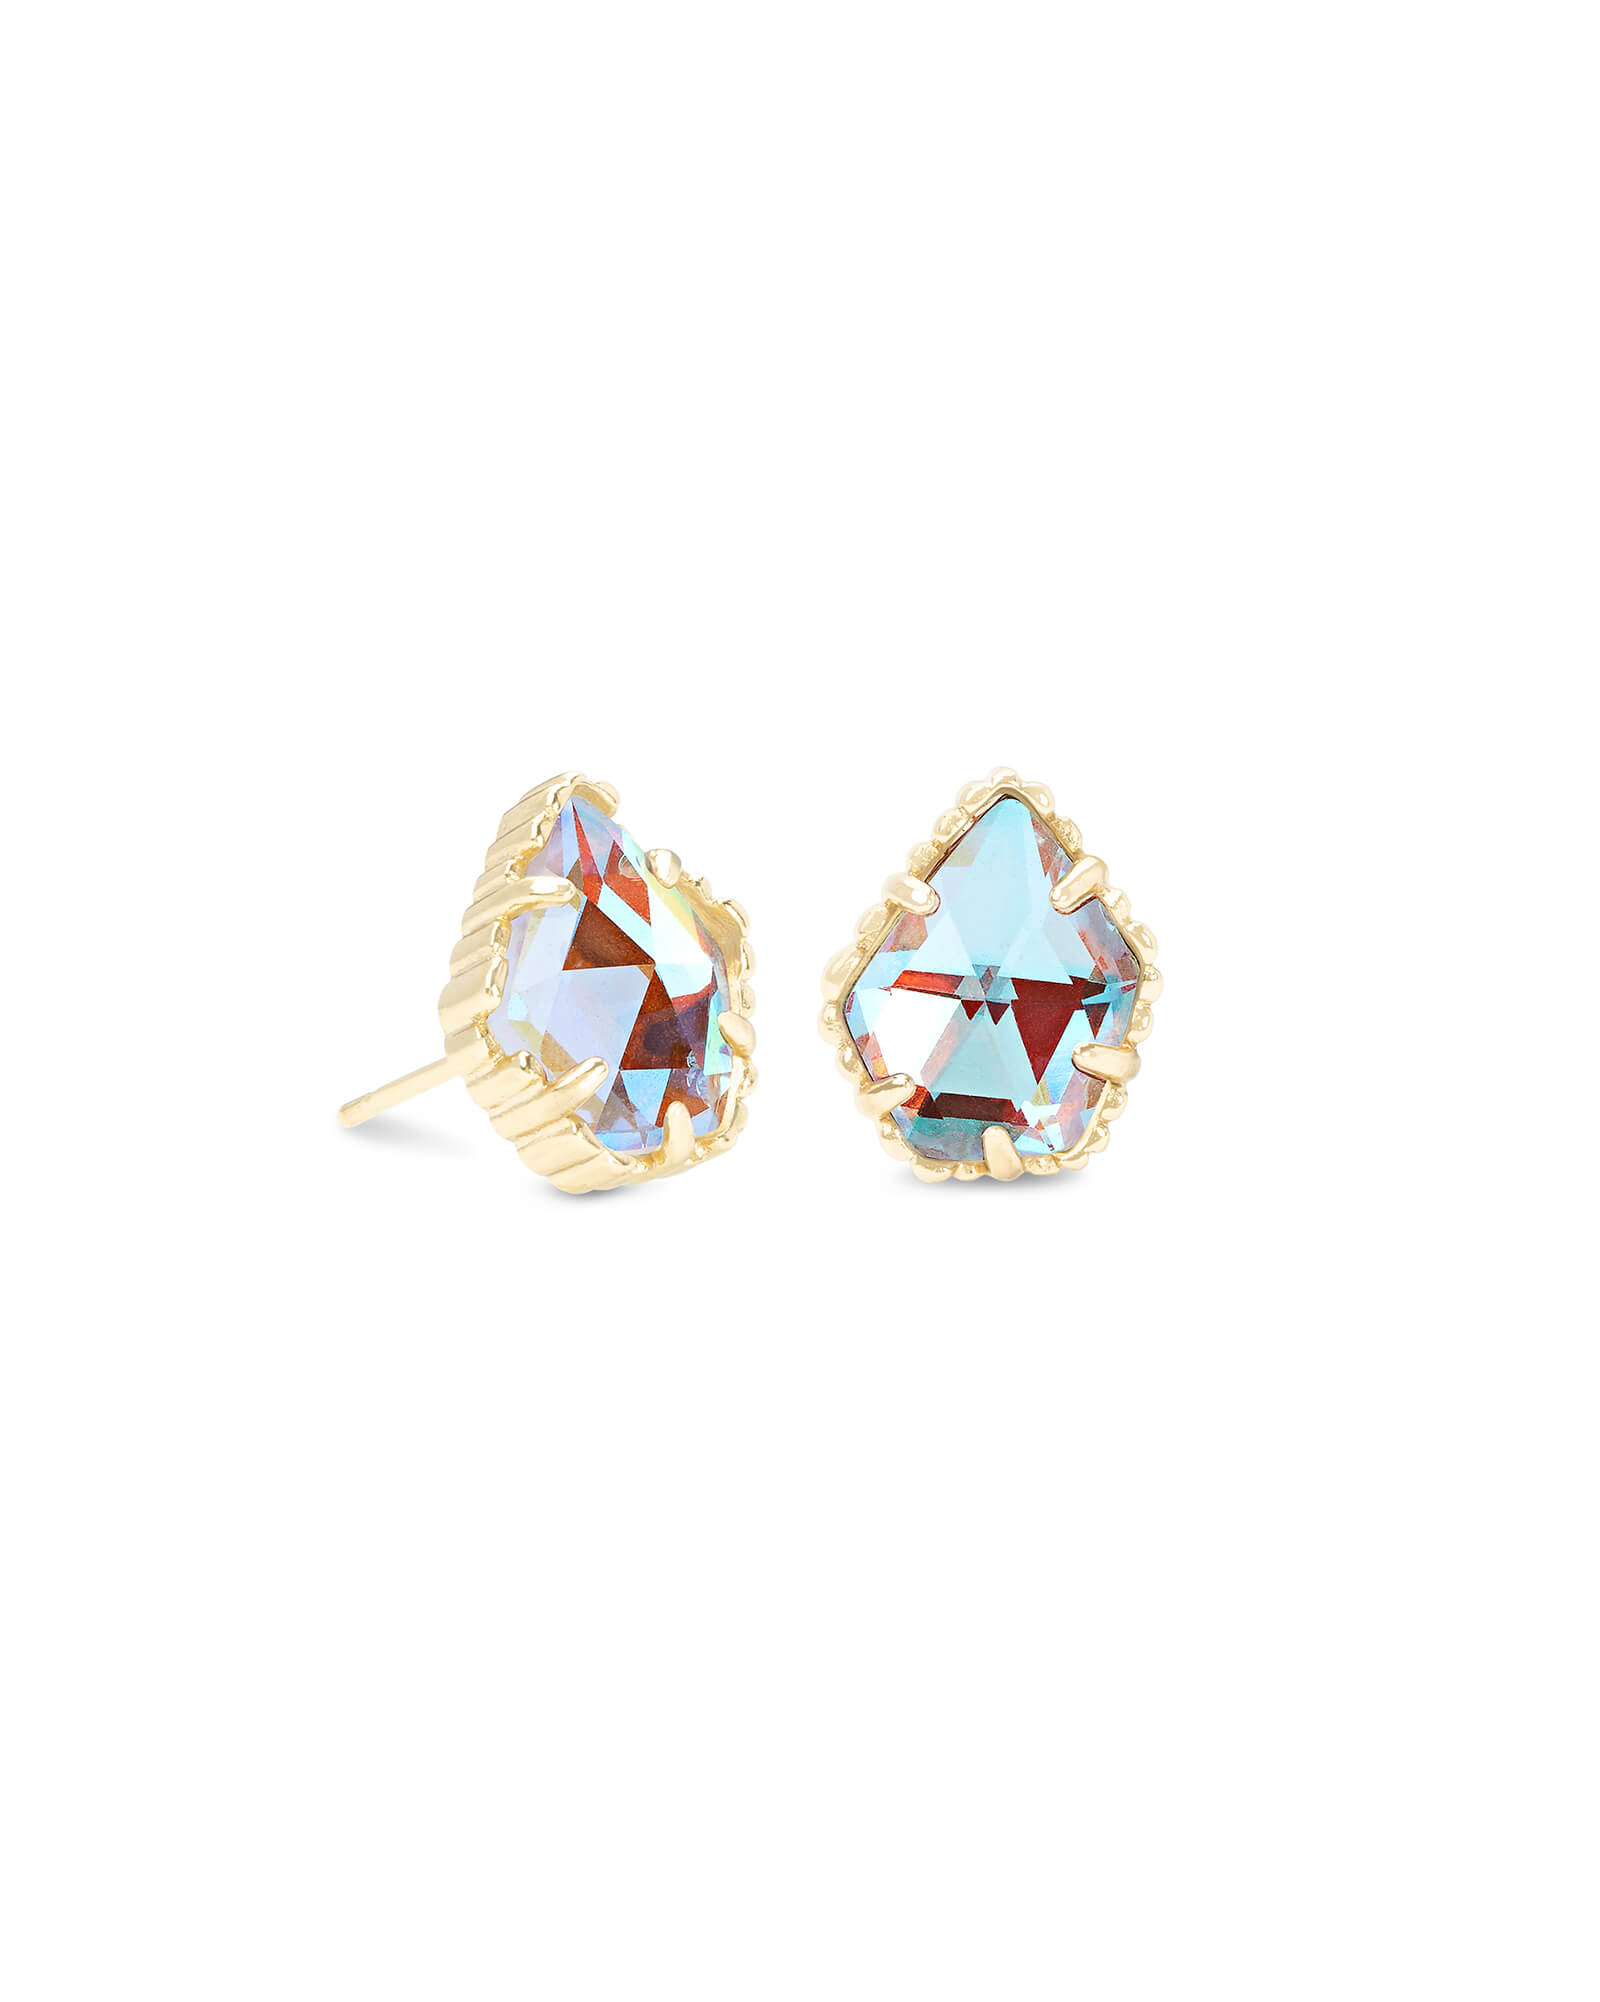 Tessa Gold Stud Earrings in Dichroic Glass | Kendra Scott